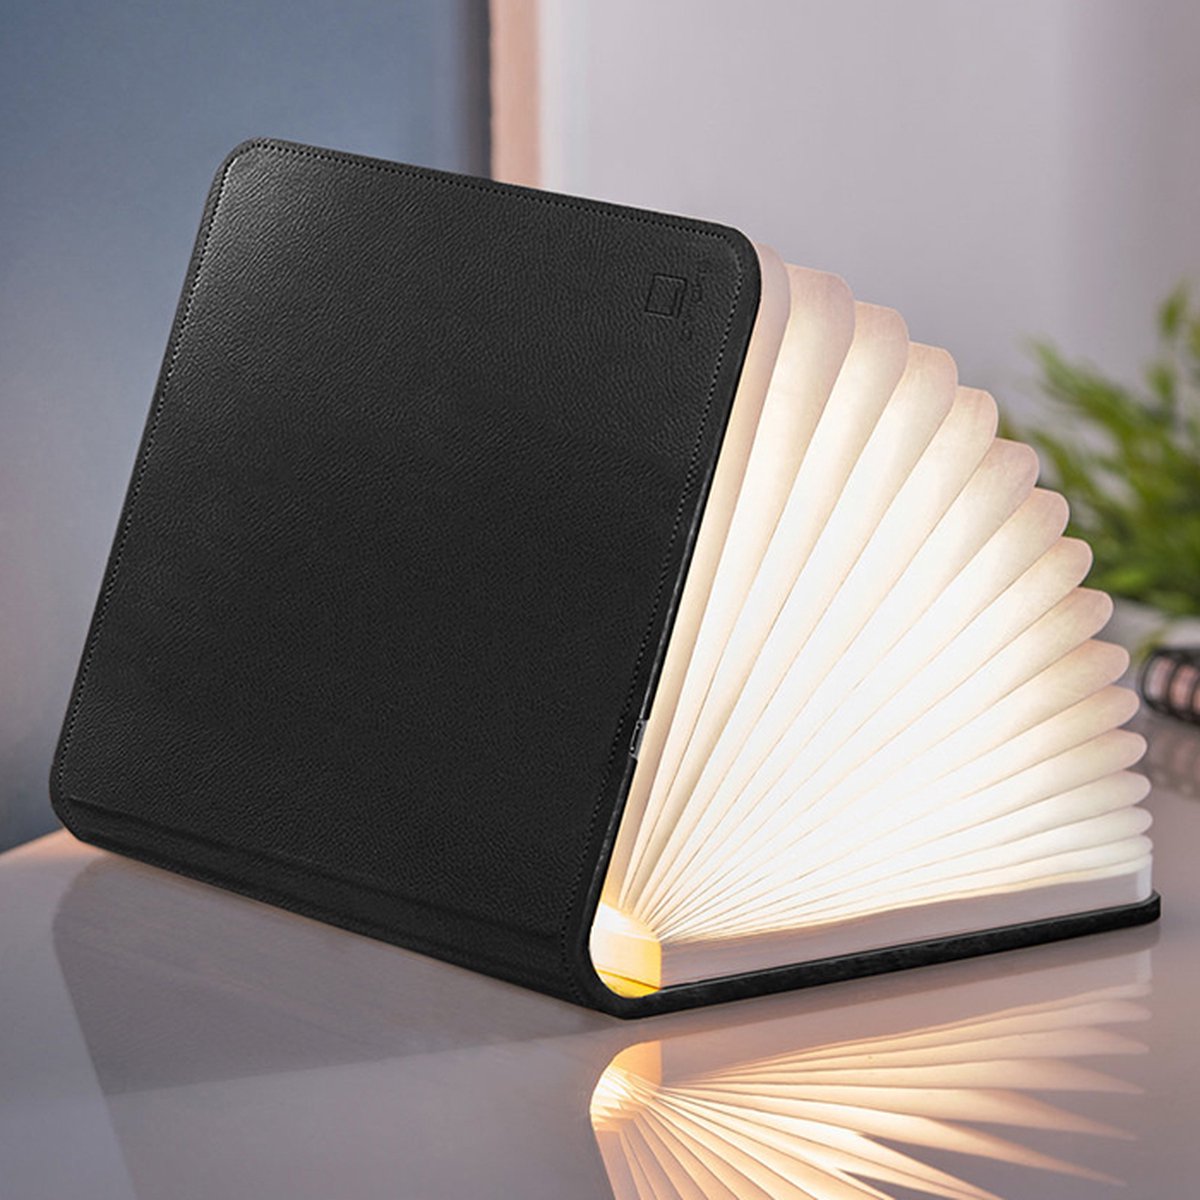 Gingko Tafellamp Smart Book Light large - zwart leder